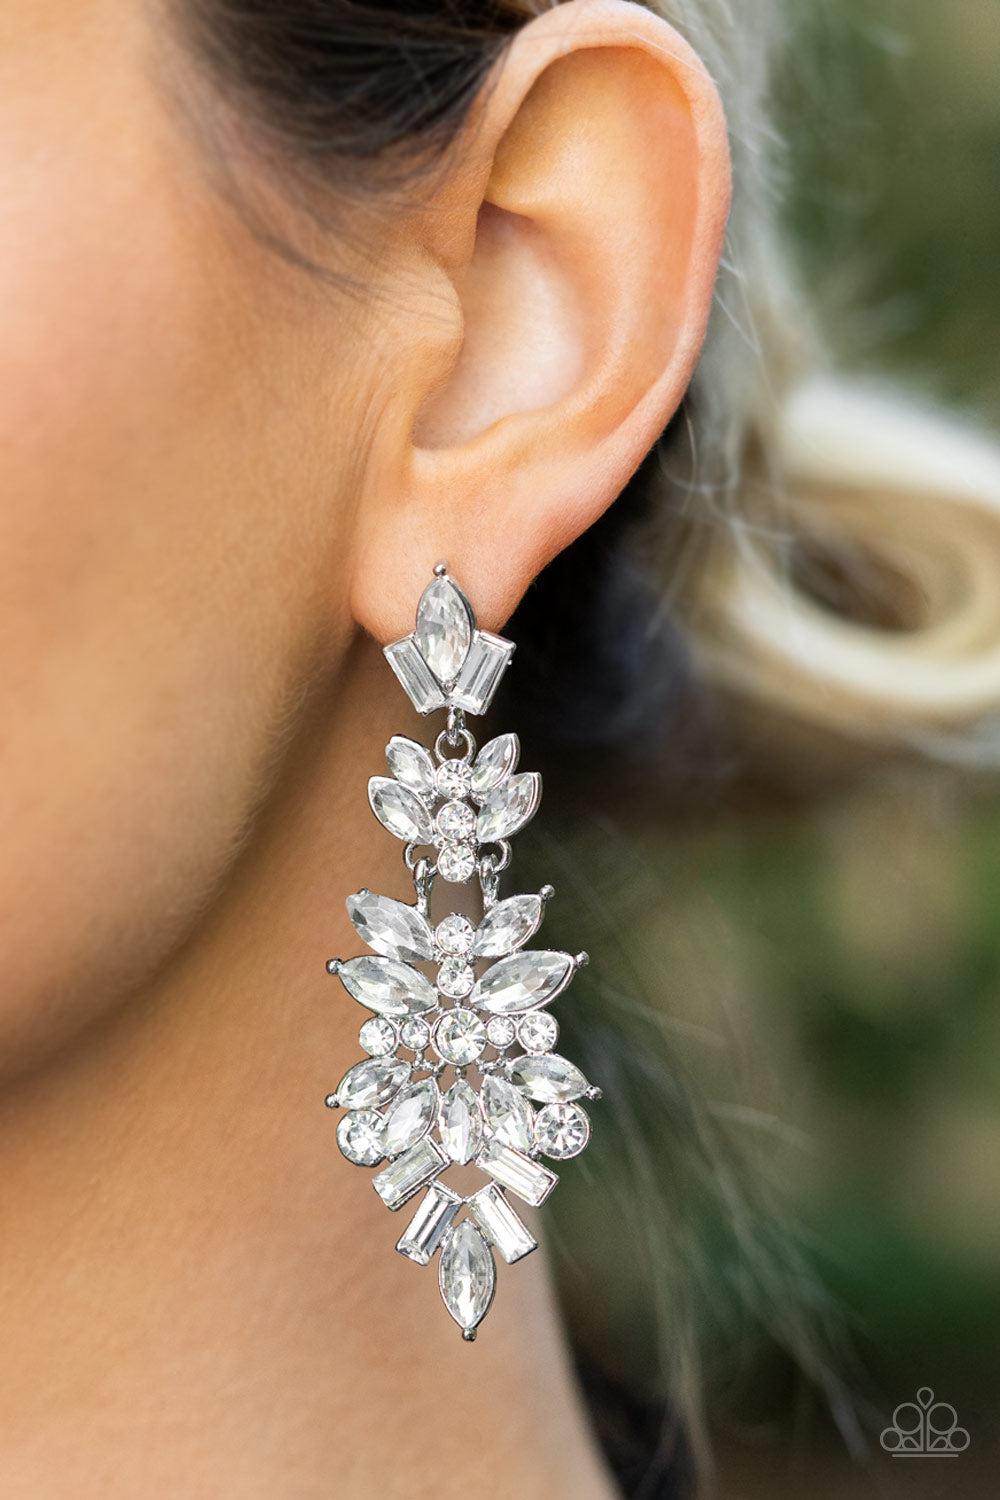 Frozen Fairytale White Rhinestone Earrings - Paparazzi Accessories- lightbox - CarasShop.com - $5 Jewelry by Cara Jewels